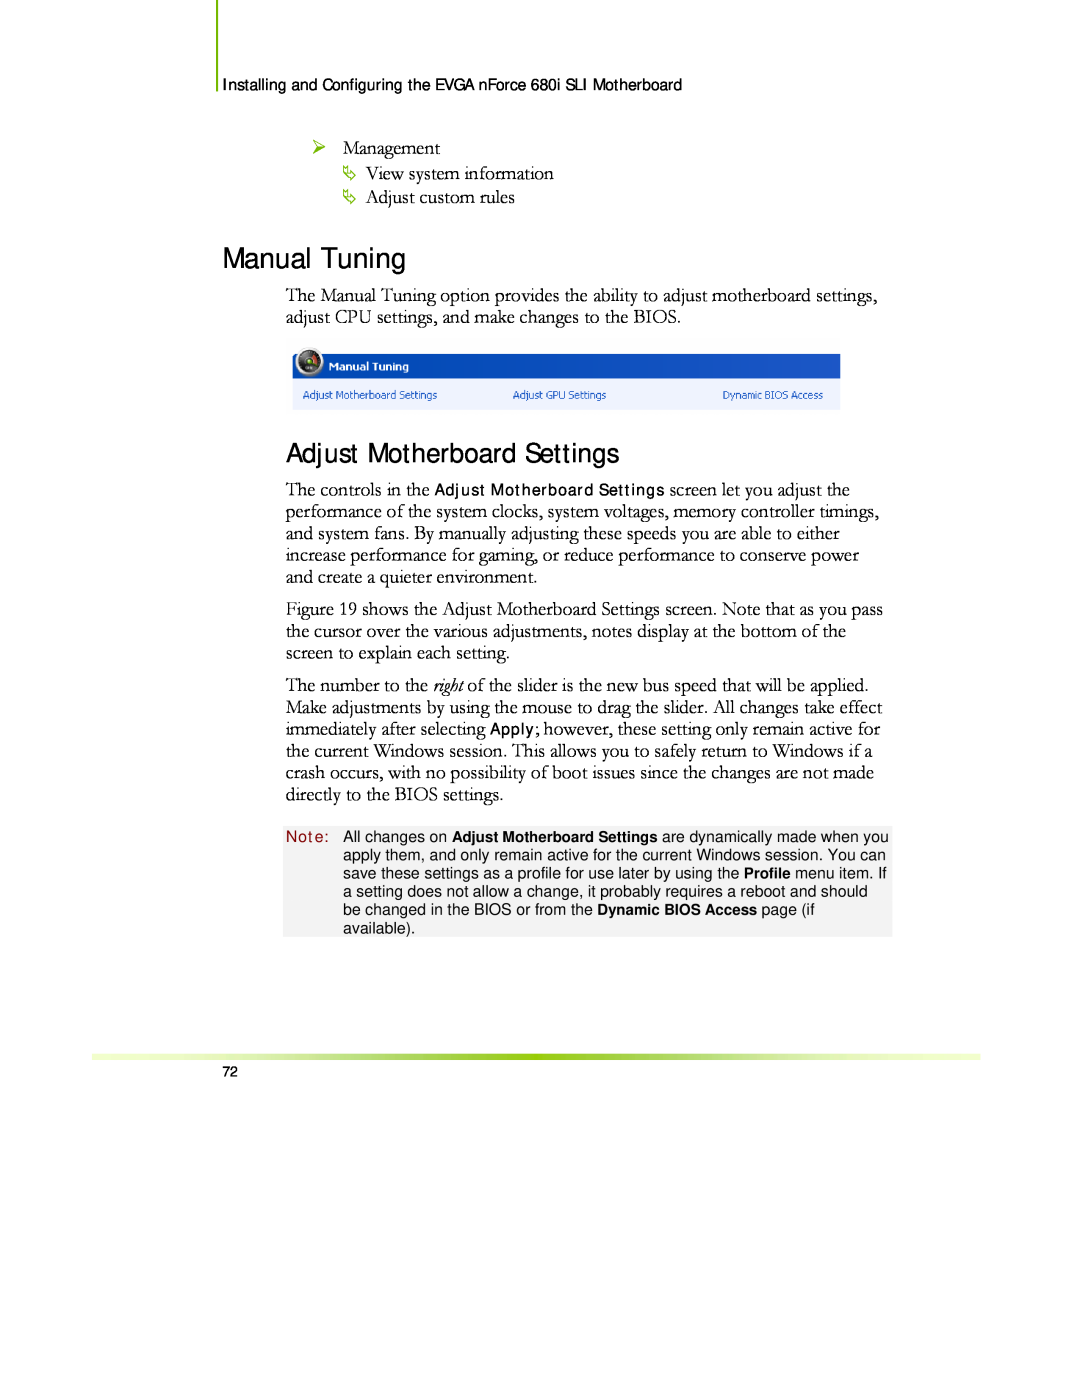 EVGA 122-CK-NF68-XX manual Manual Tuning, Adjust Motherboard Settings 